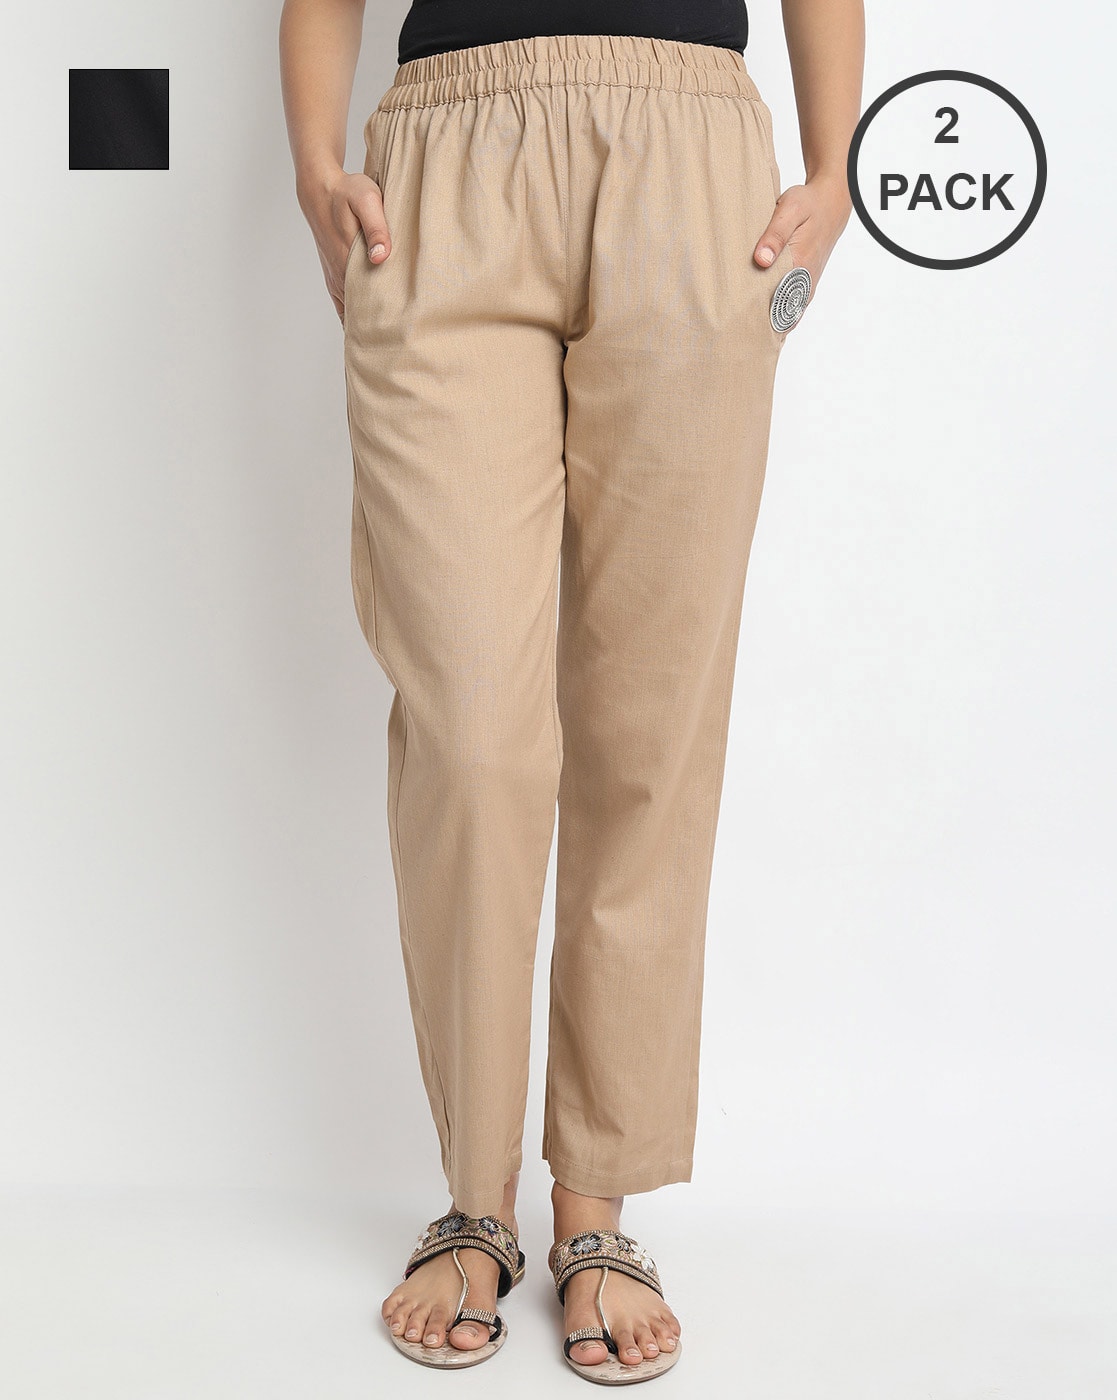 Buy Brugundy Trousers & Pants for Women by Kryptic Online | Ajio.com